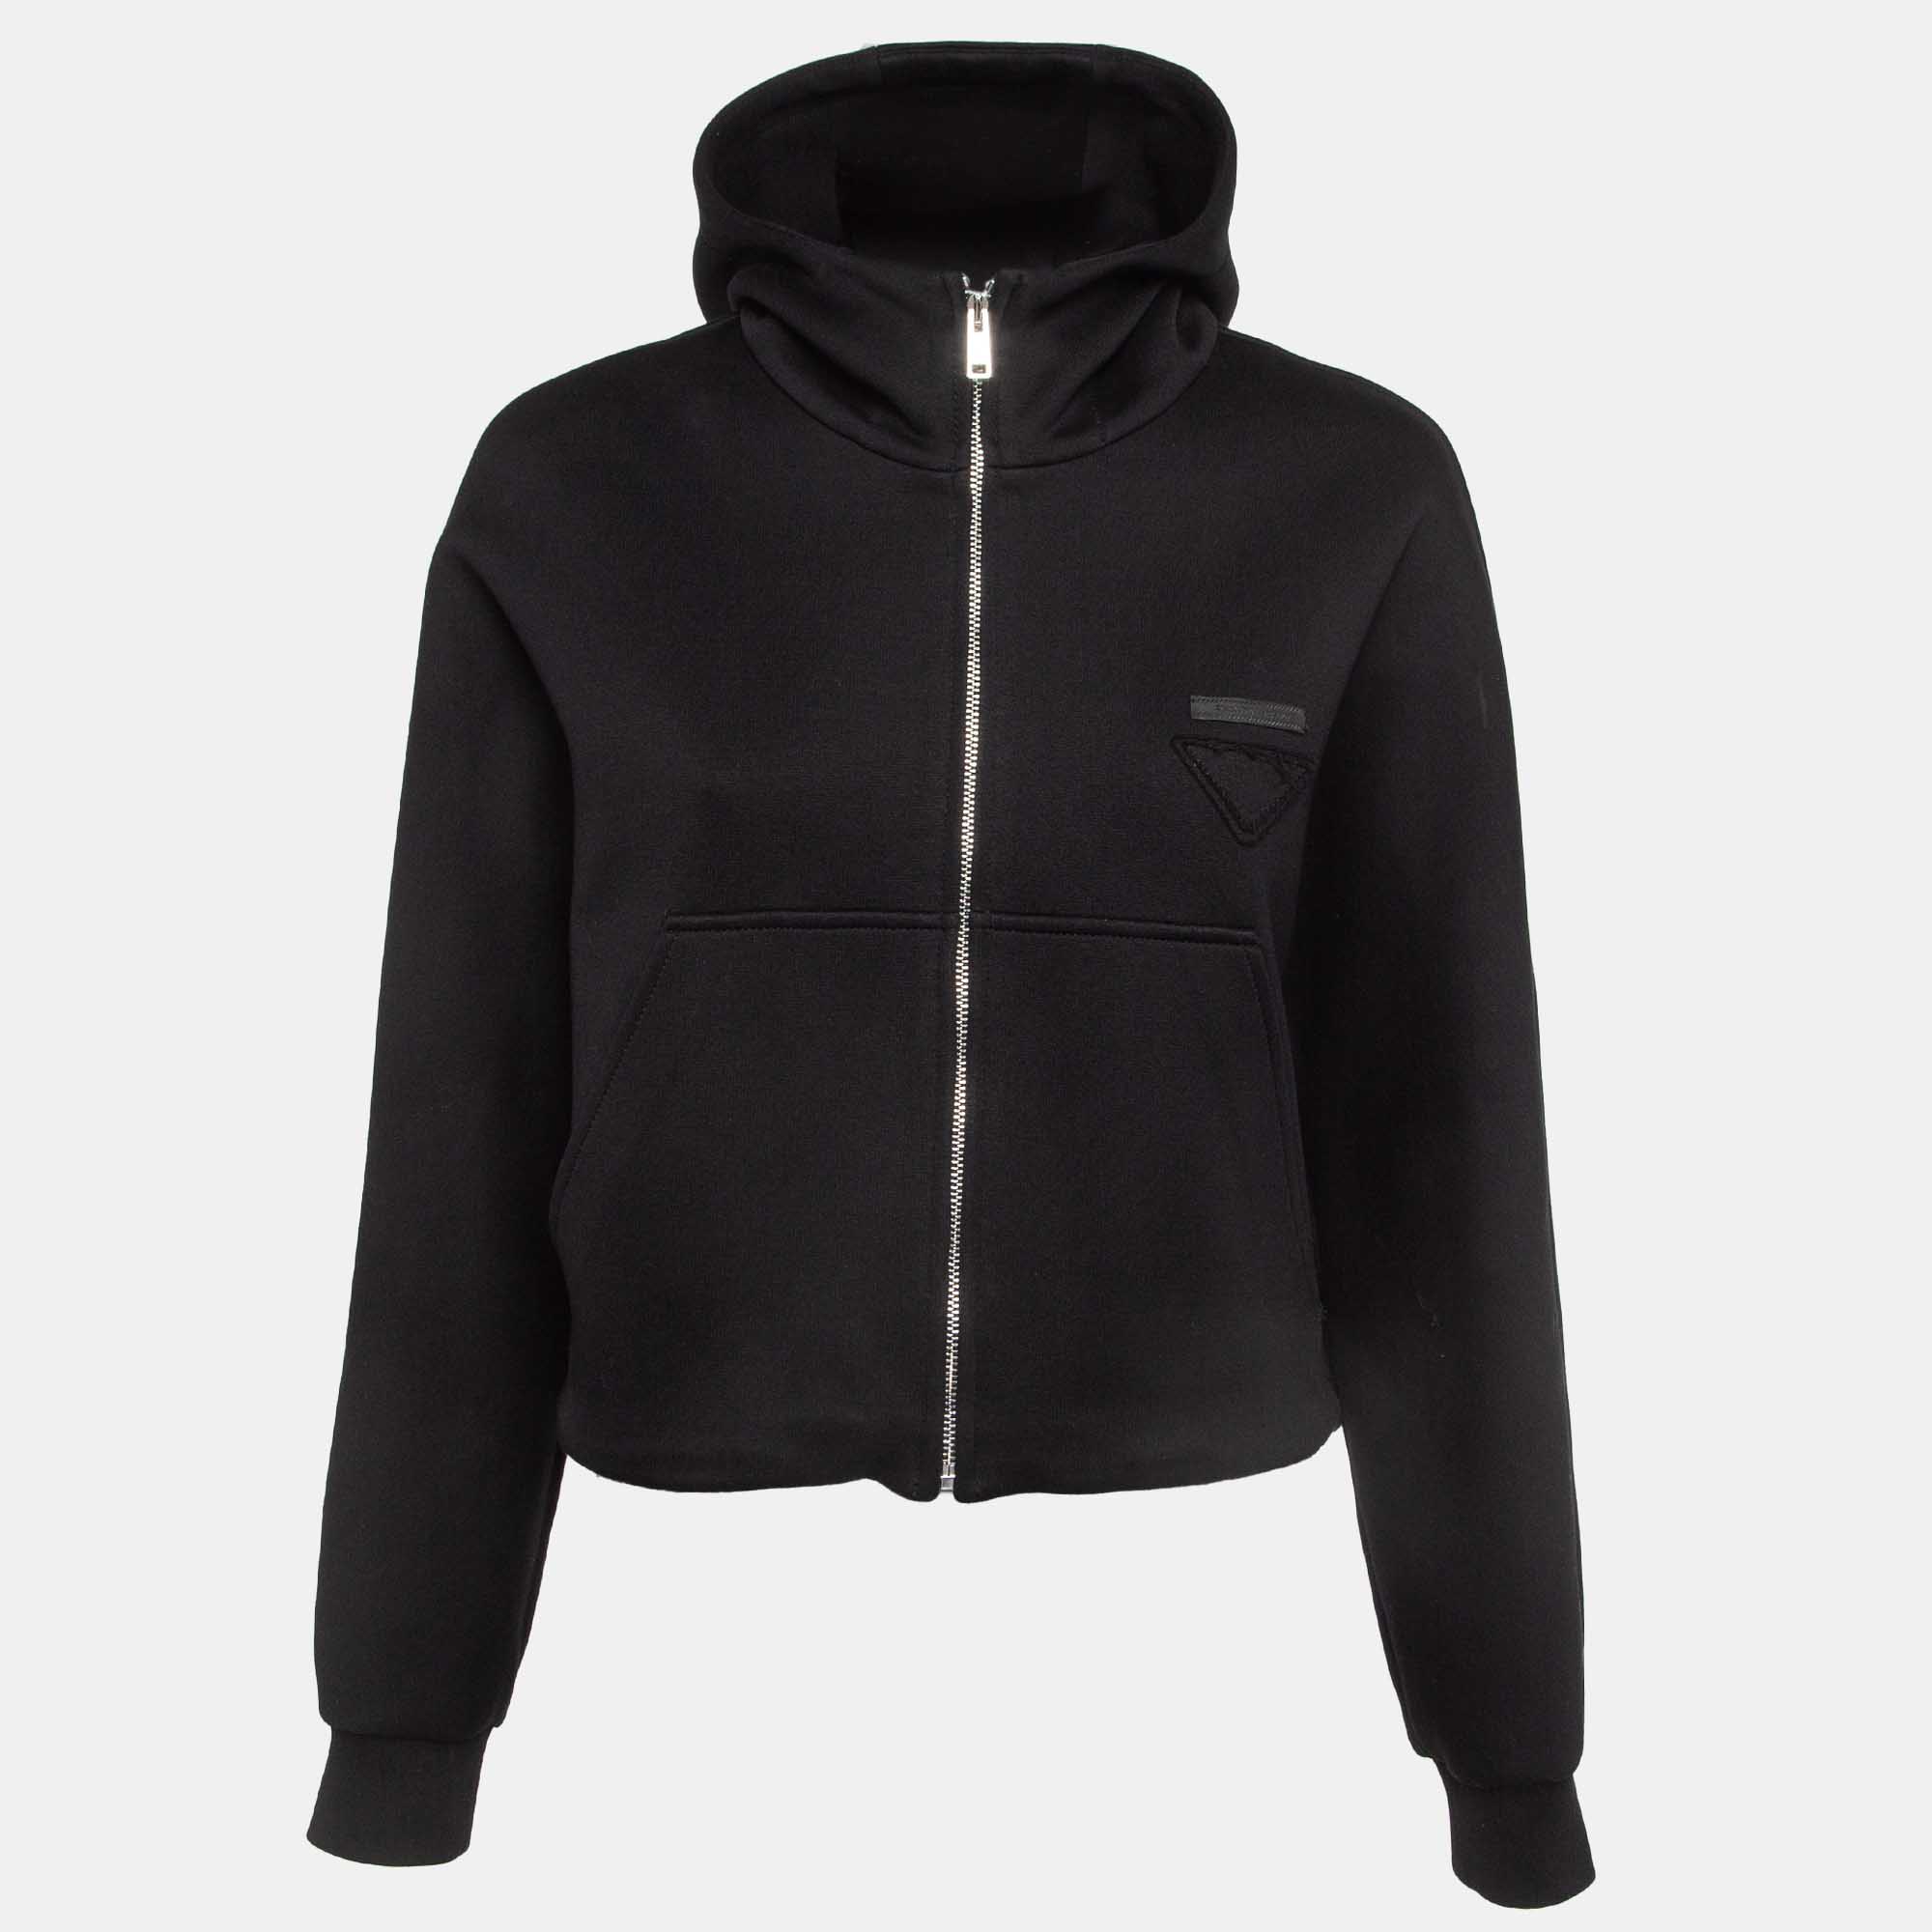 Prada black jersey cropped hoodie s